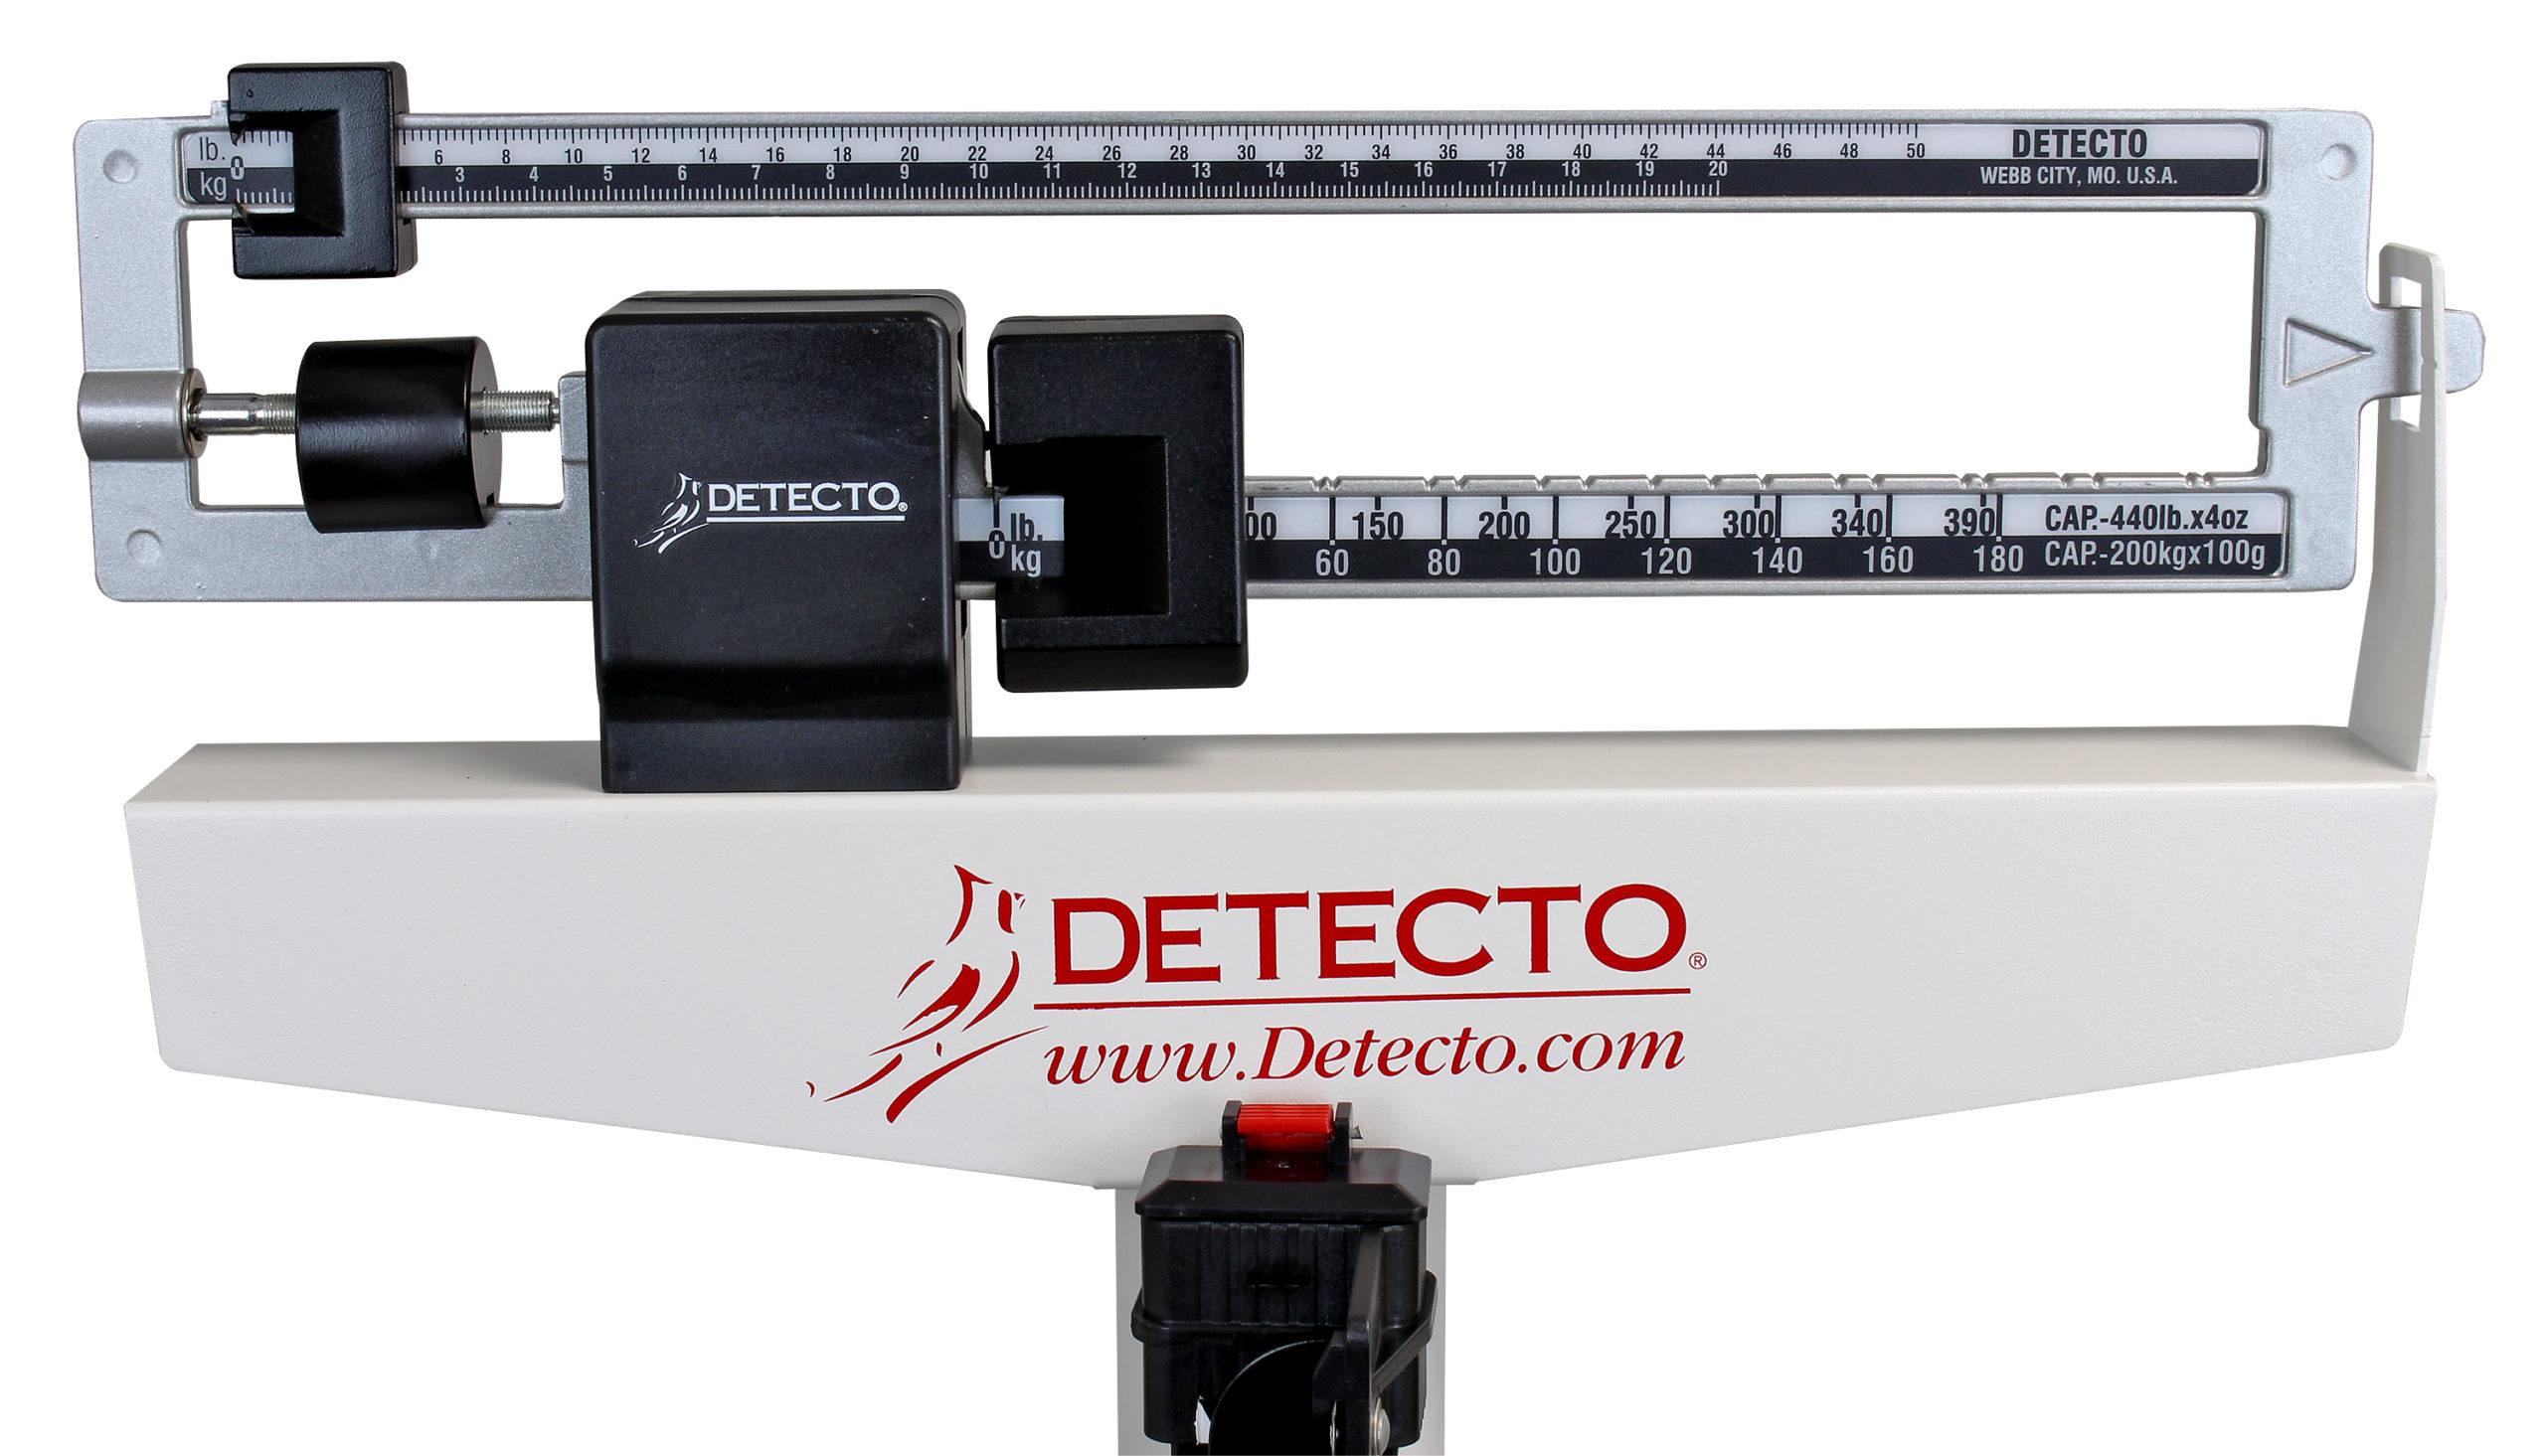 Detecto DM15 - Price Computing Scale Electronic 240 oz. Capacity